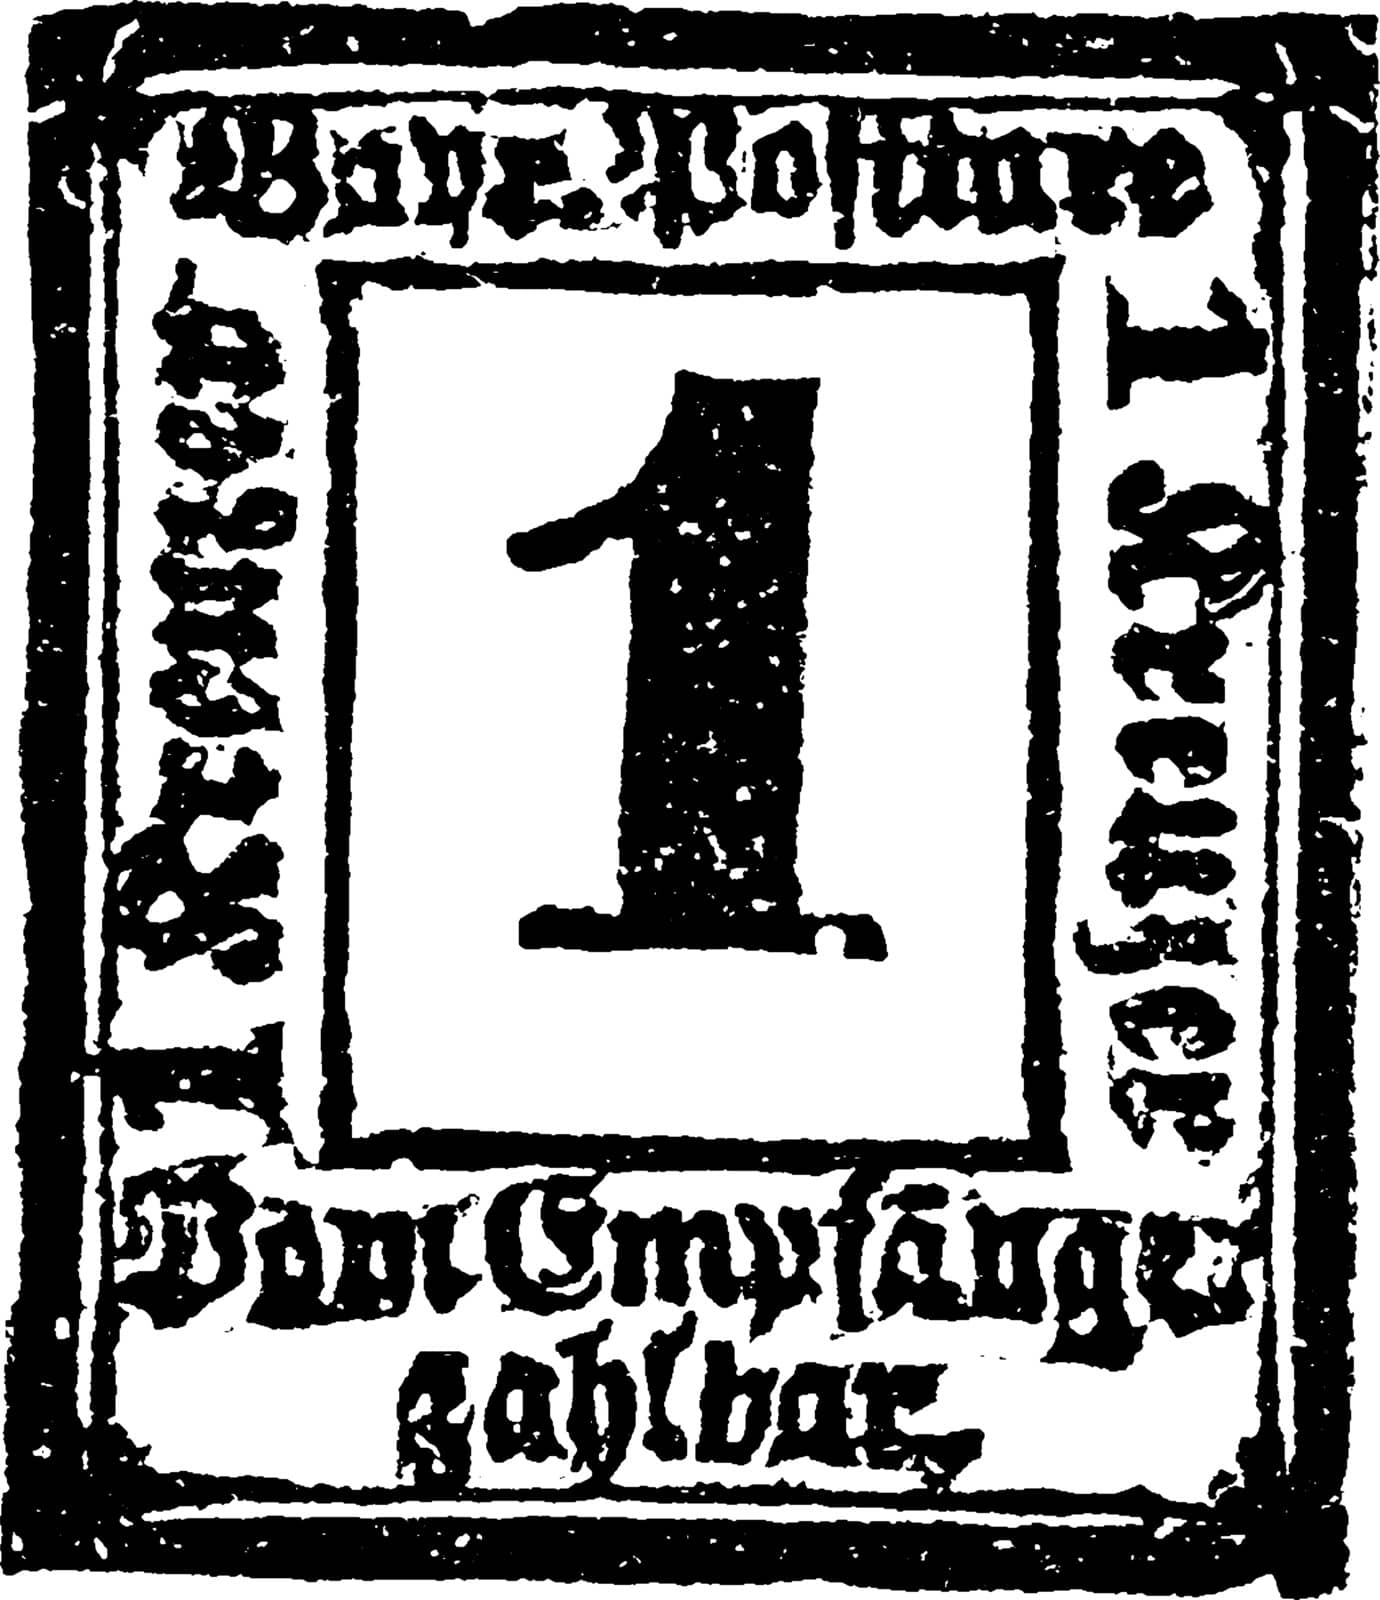 Bavaria Return Letter Stamp Unknown Value in 1865, vintage illus by Morphart